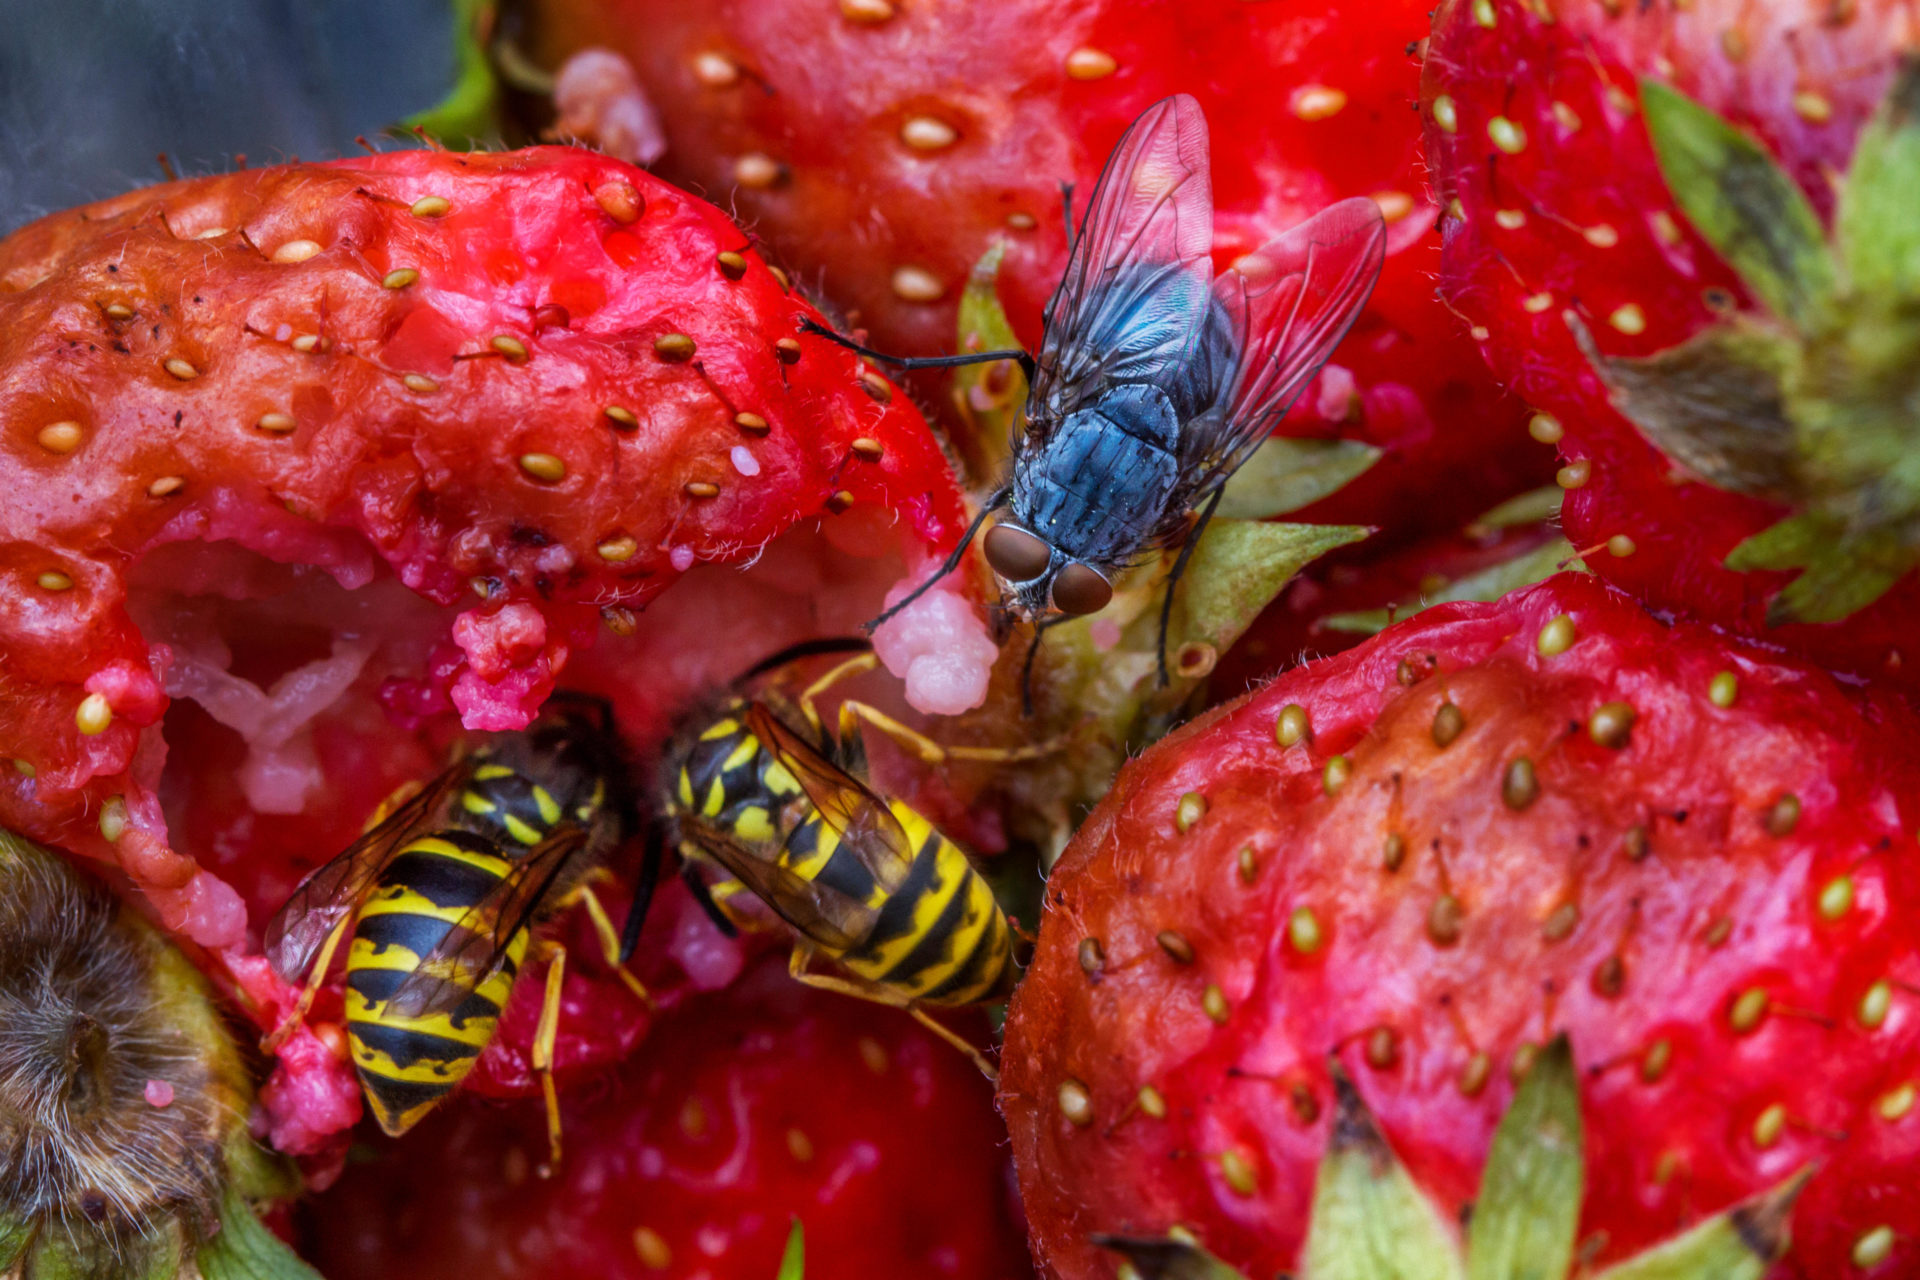 Wasps and flies eating rotten strawberries in garden